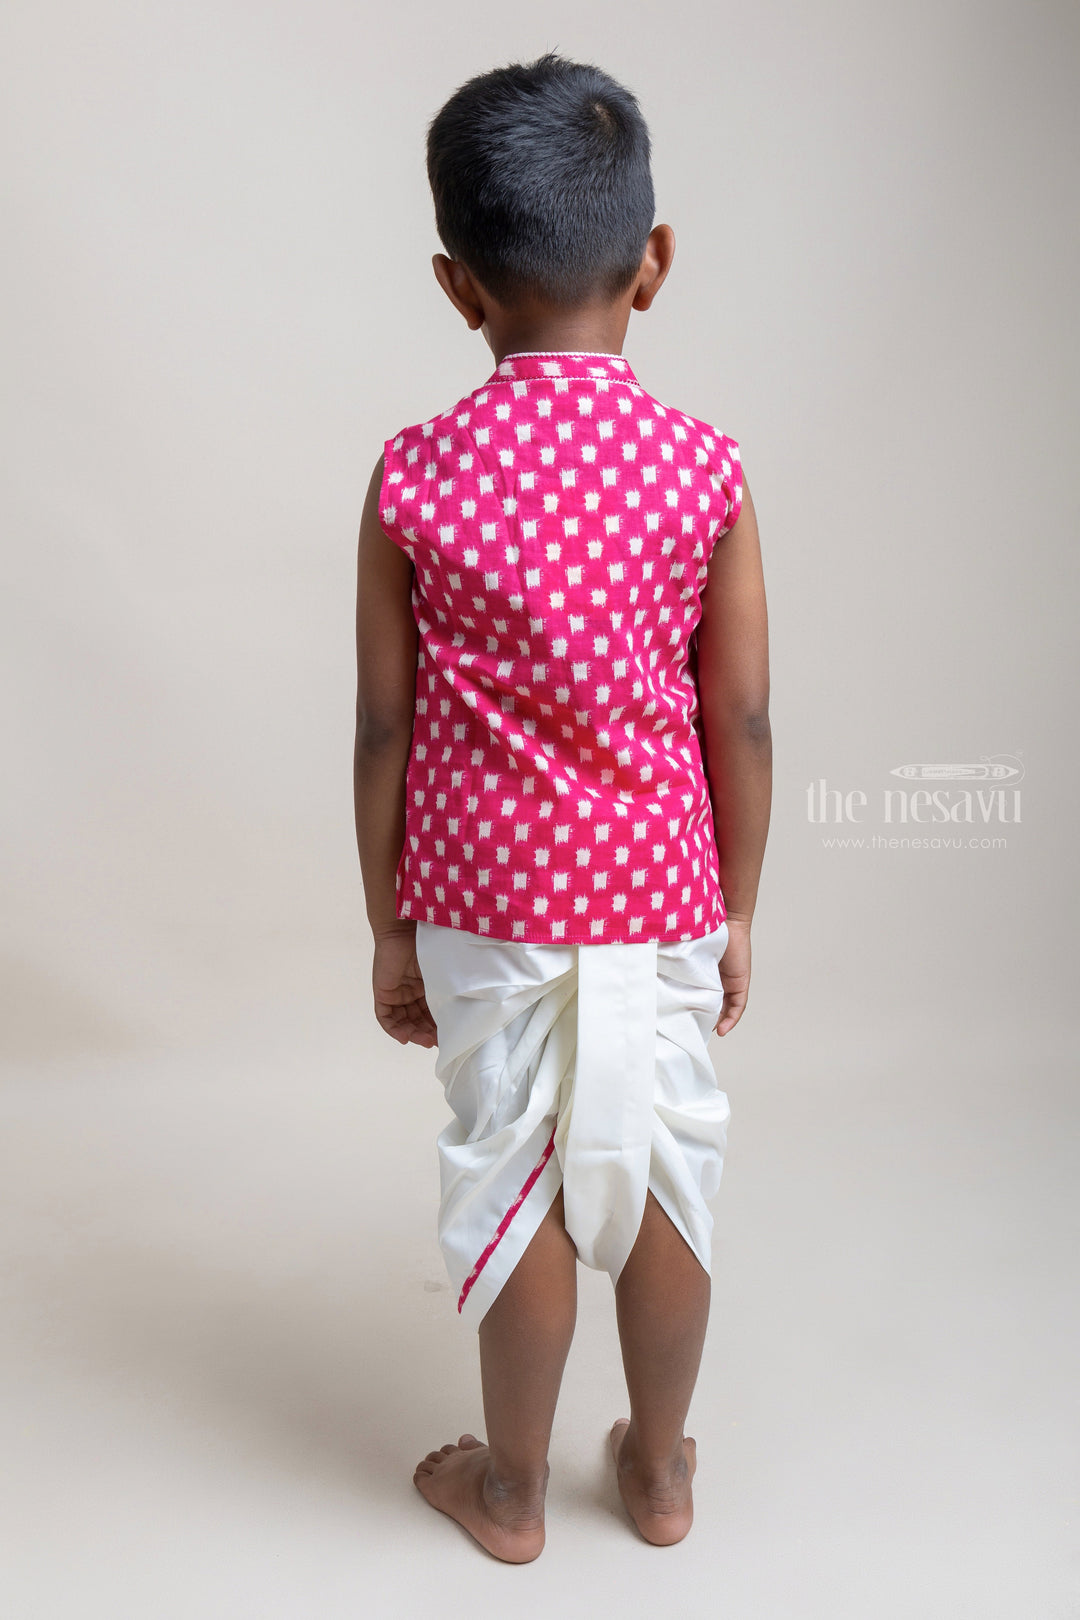 The Nesavu Boys Dothi Set Latest Pink Ethnic Kurta With White Dhoti For Little Boys Nesavu Latest Collection of Ethnic Wear | Boys Kurta Set | The Nesavu